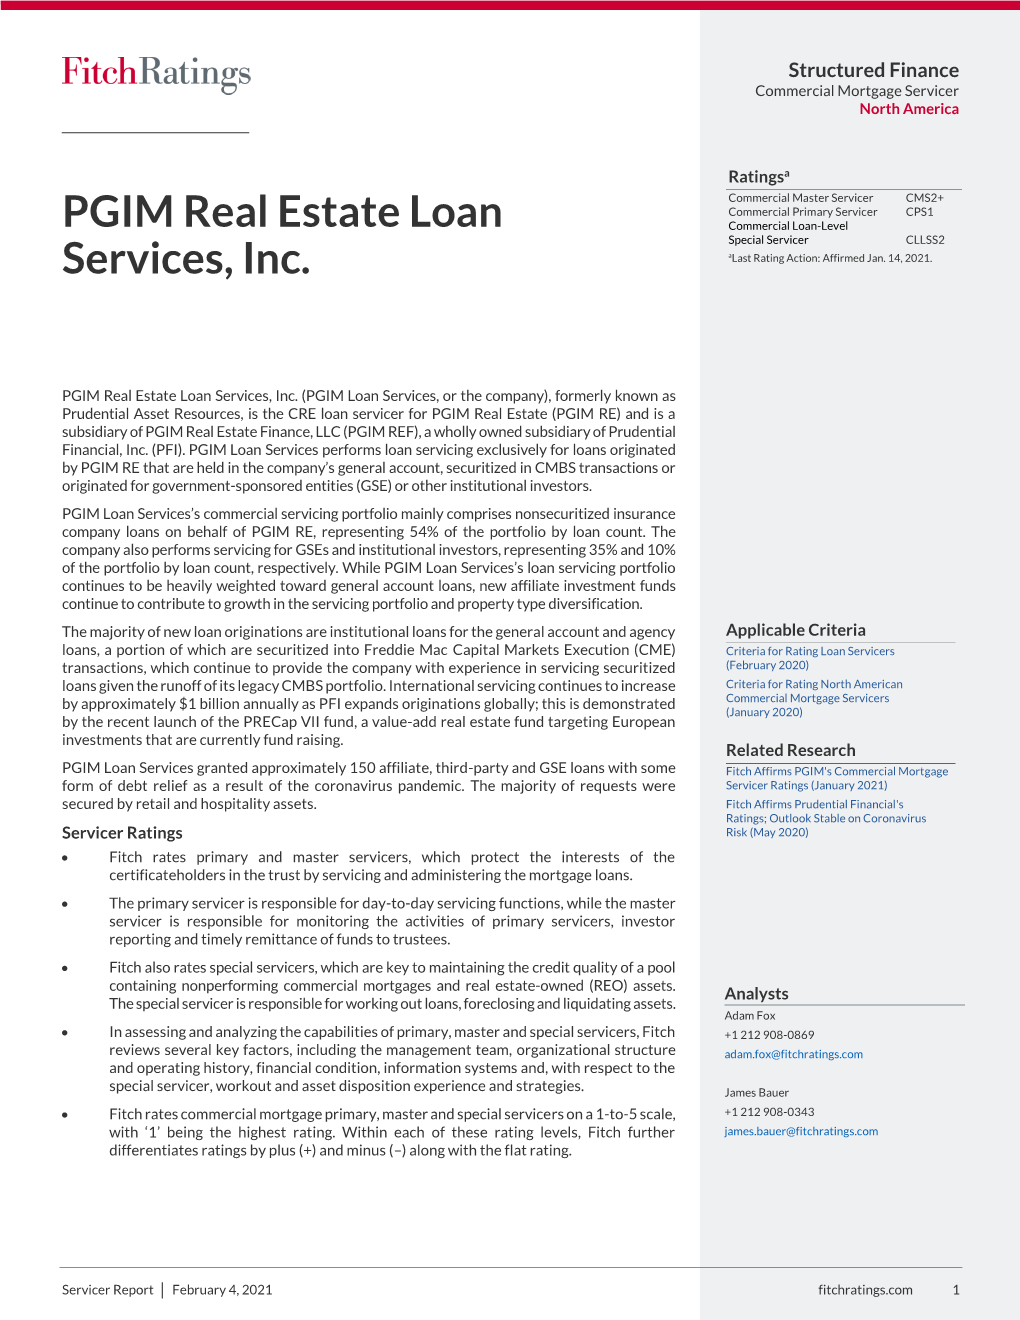 PGIM Real Estate Loan Services, Inc